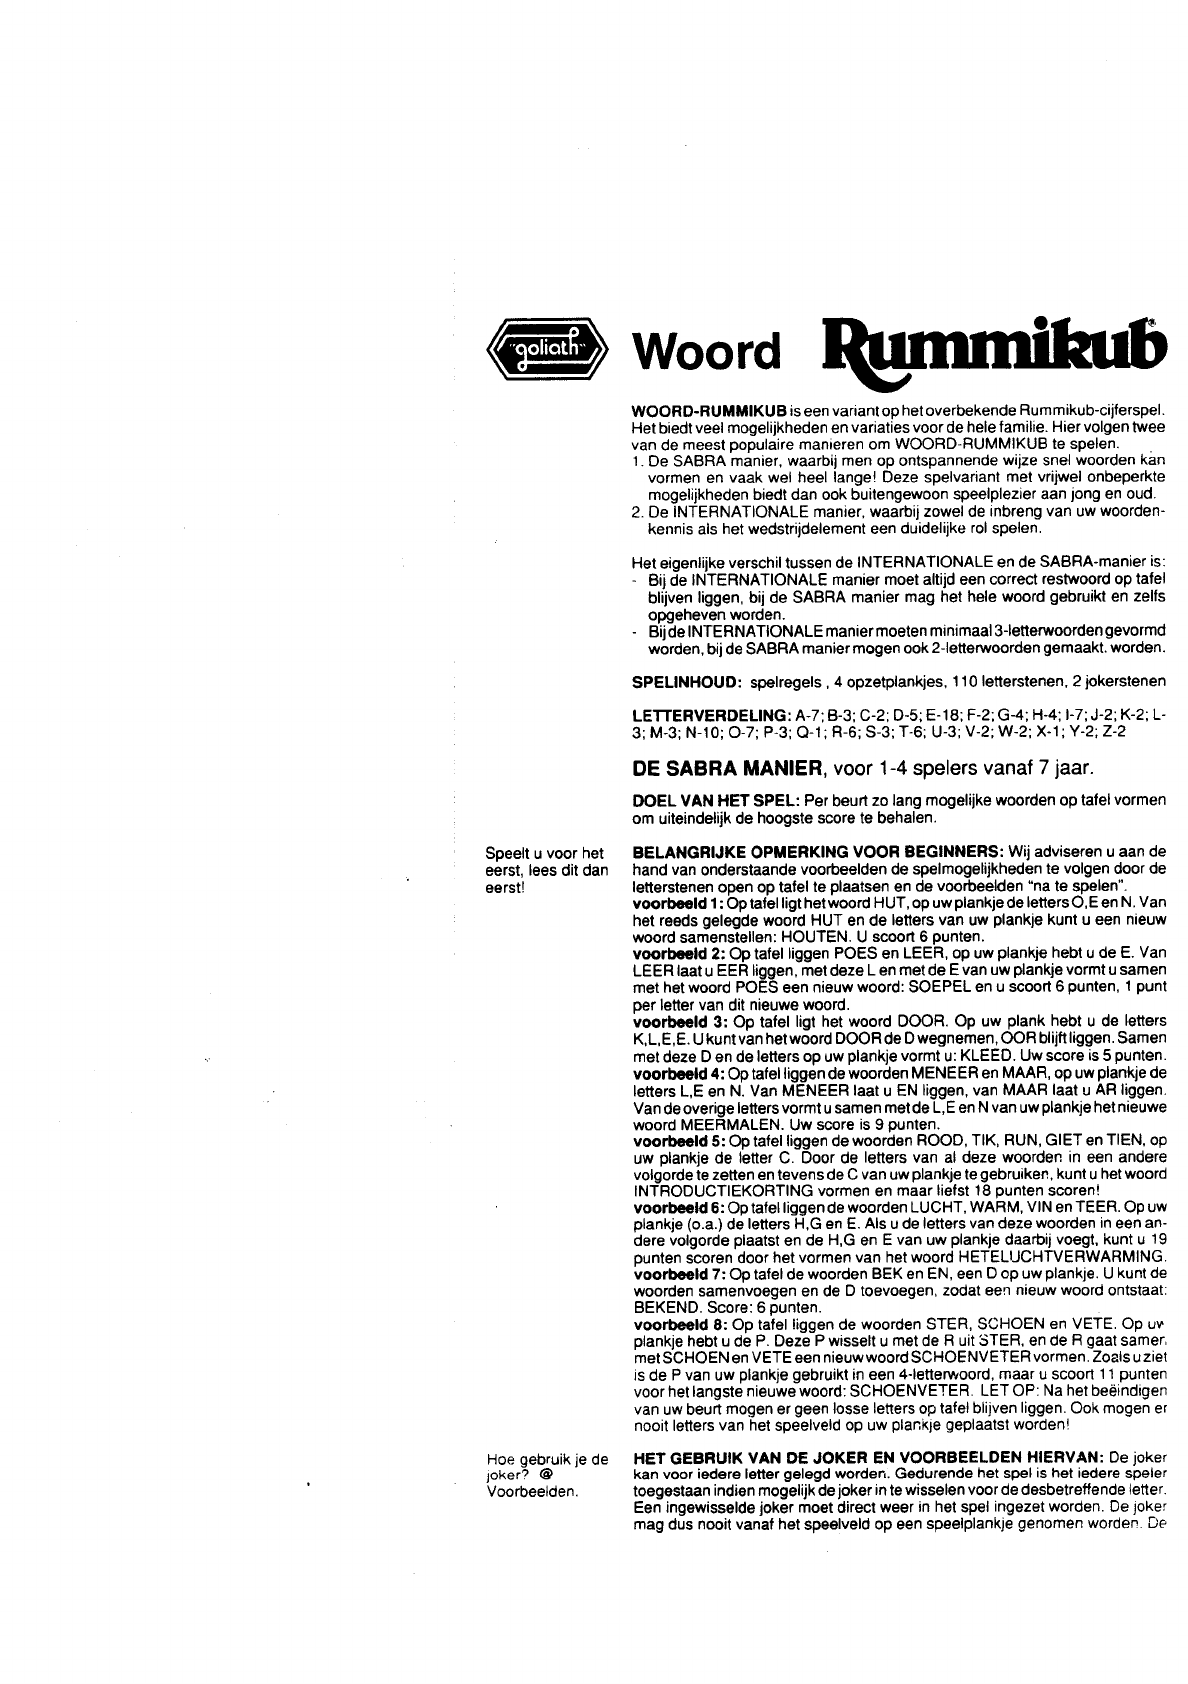 Plantage deeltje Enten Handleiding Goliath rummikub woord (pagina 1 van 6) (Nederlands)